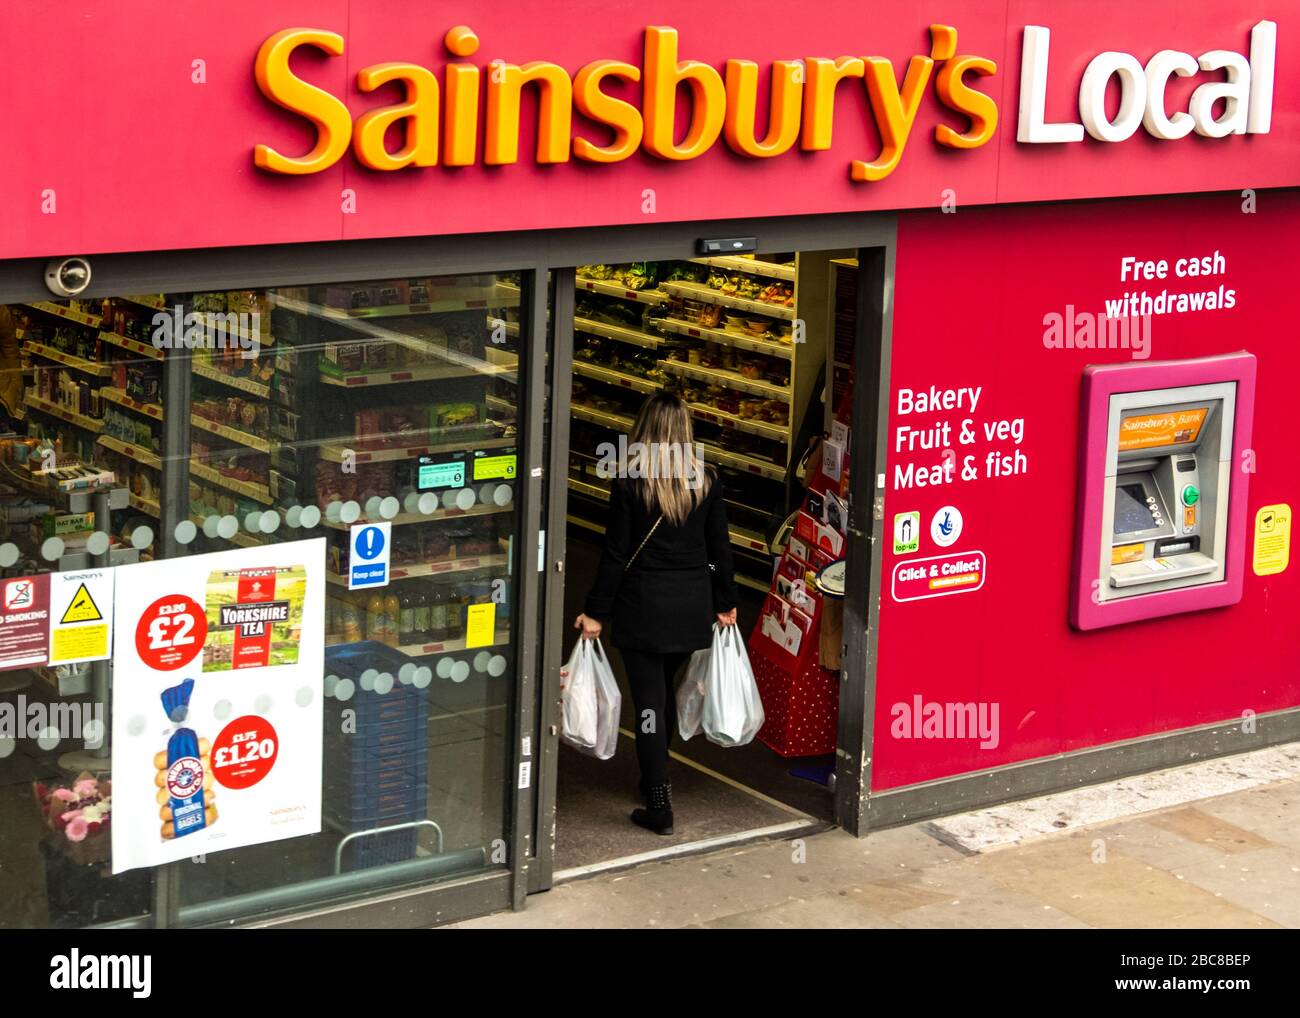 Sainsbury's Local, British supermarket branch, exterior logo / signage- London Stock Photo